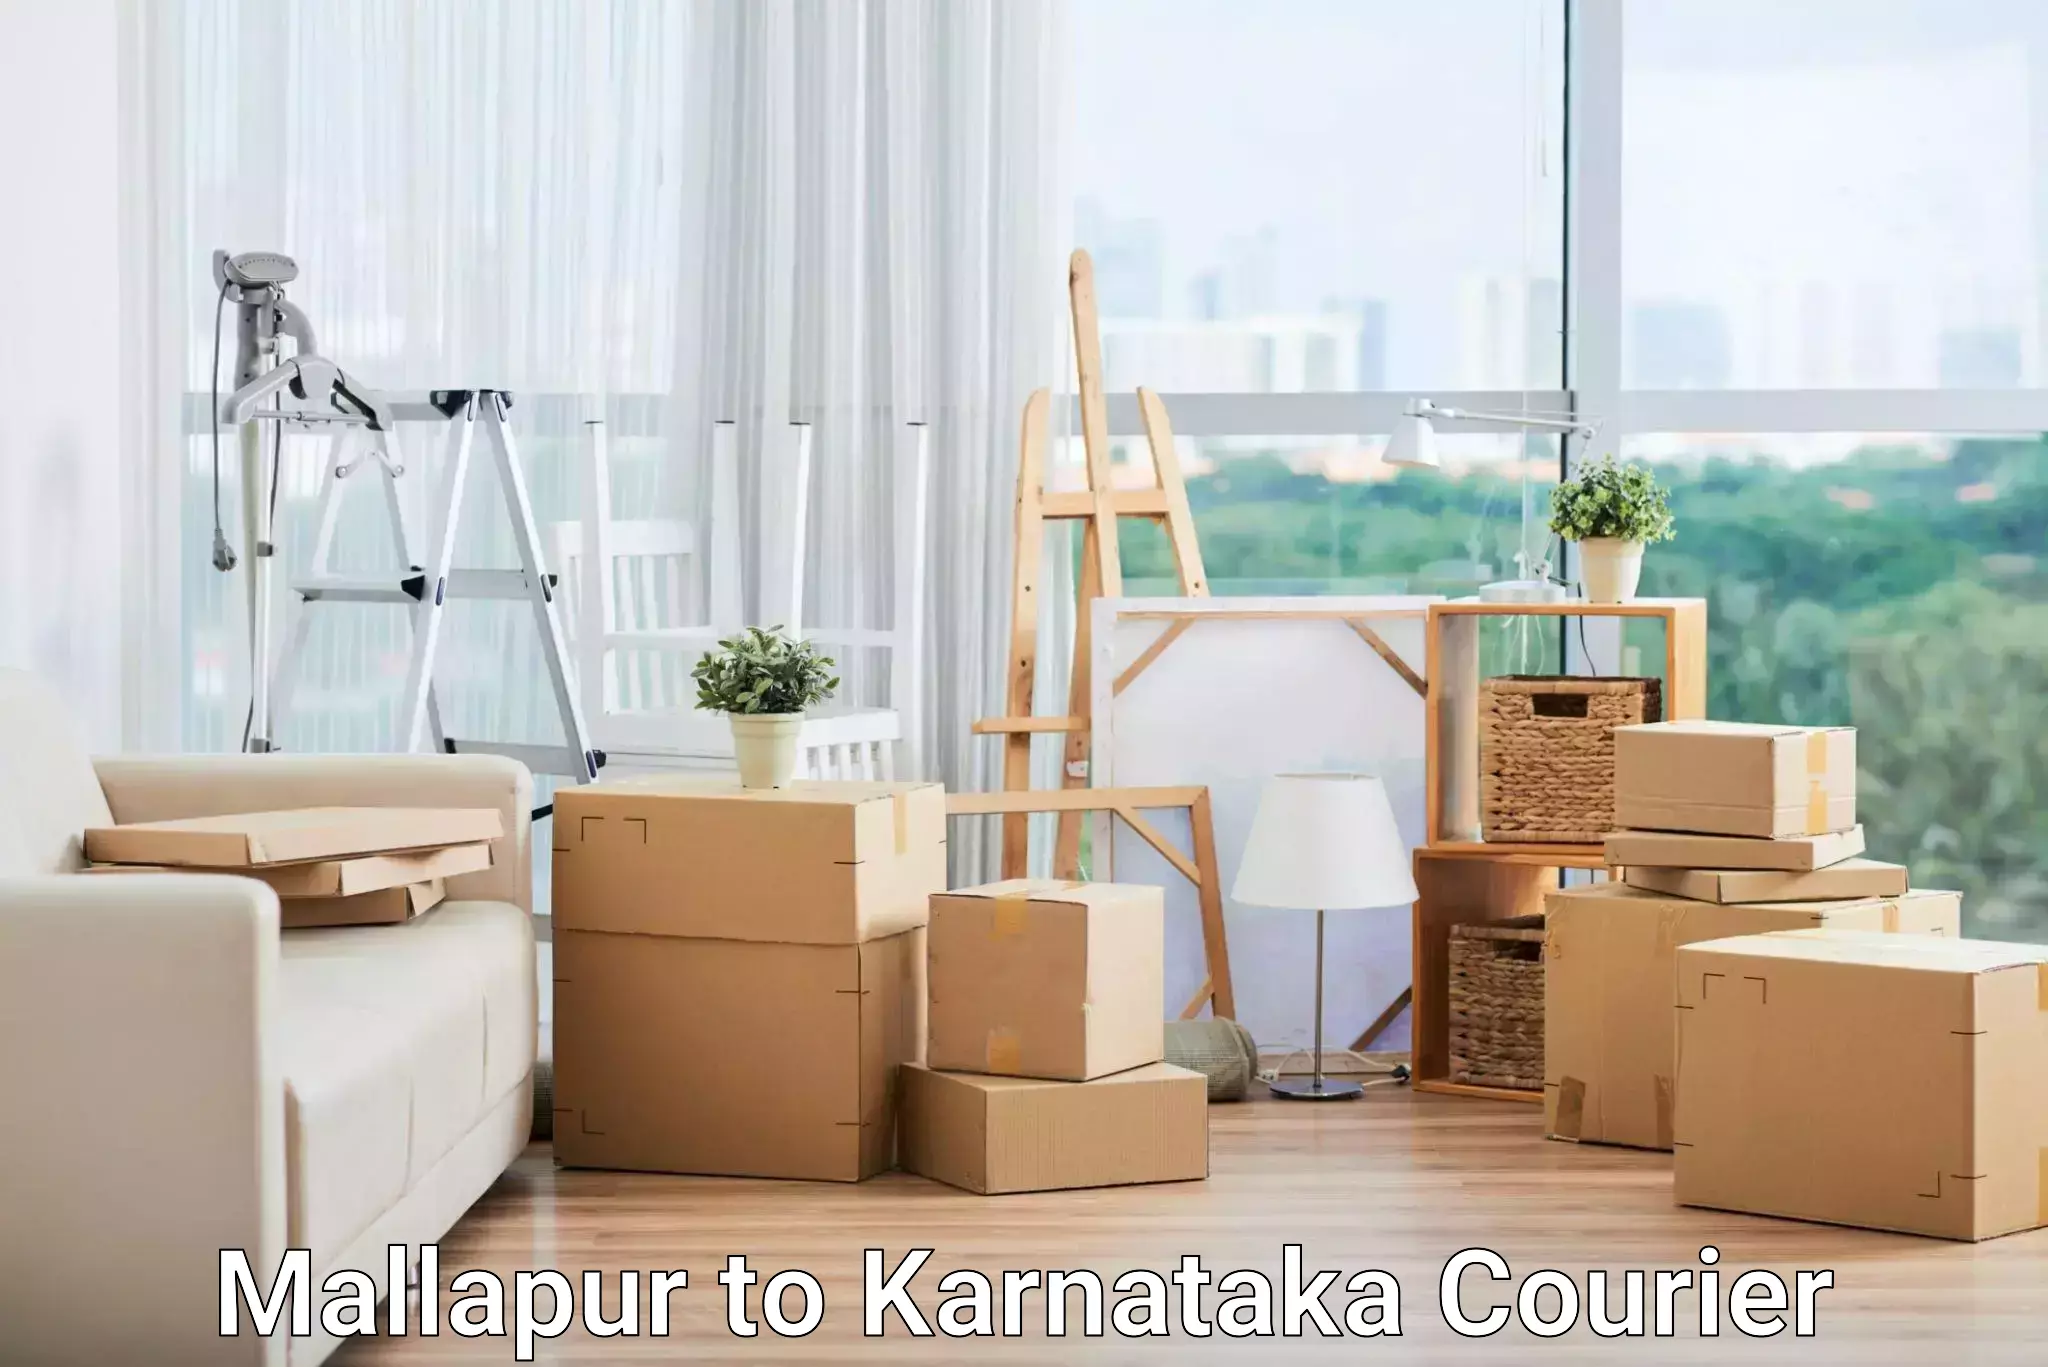 Urban courier service Mallapur to Bangalore